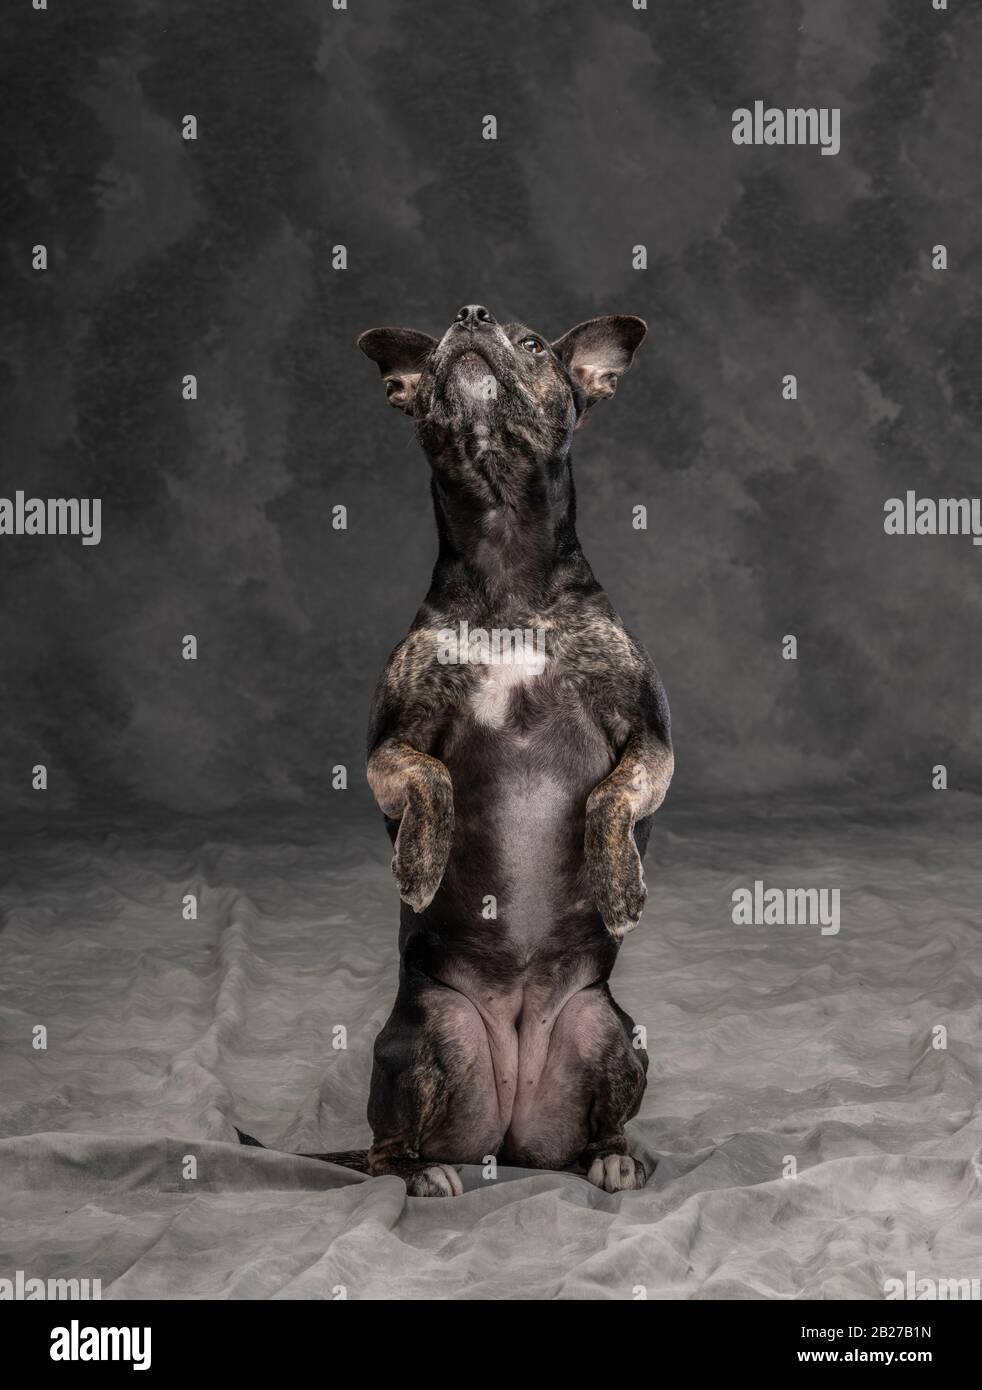 Black dog studio portrait Stock Photo